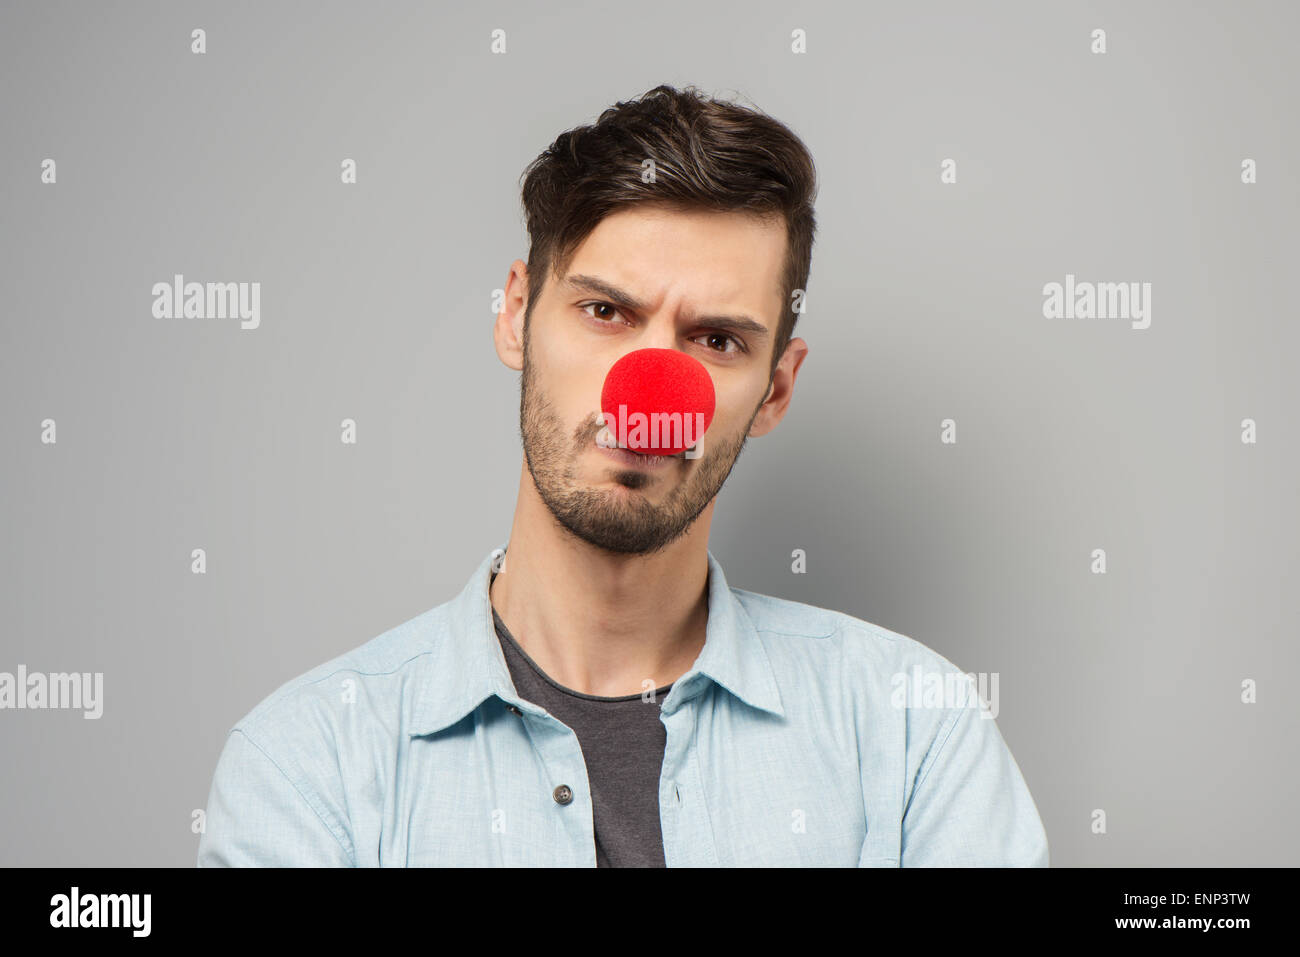 Sad young man with clown nose Stock Photo